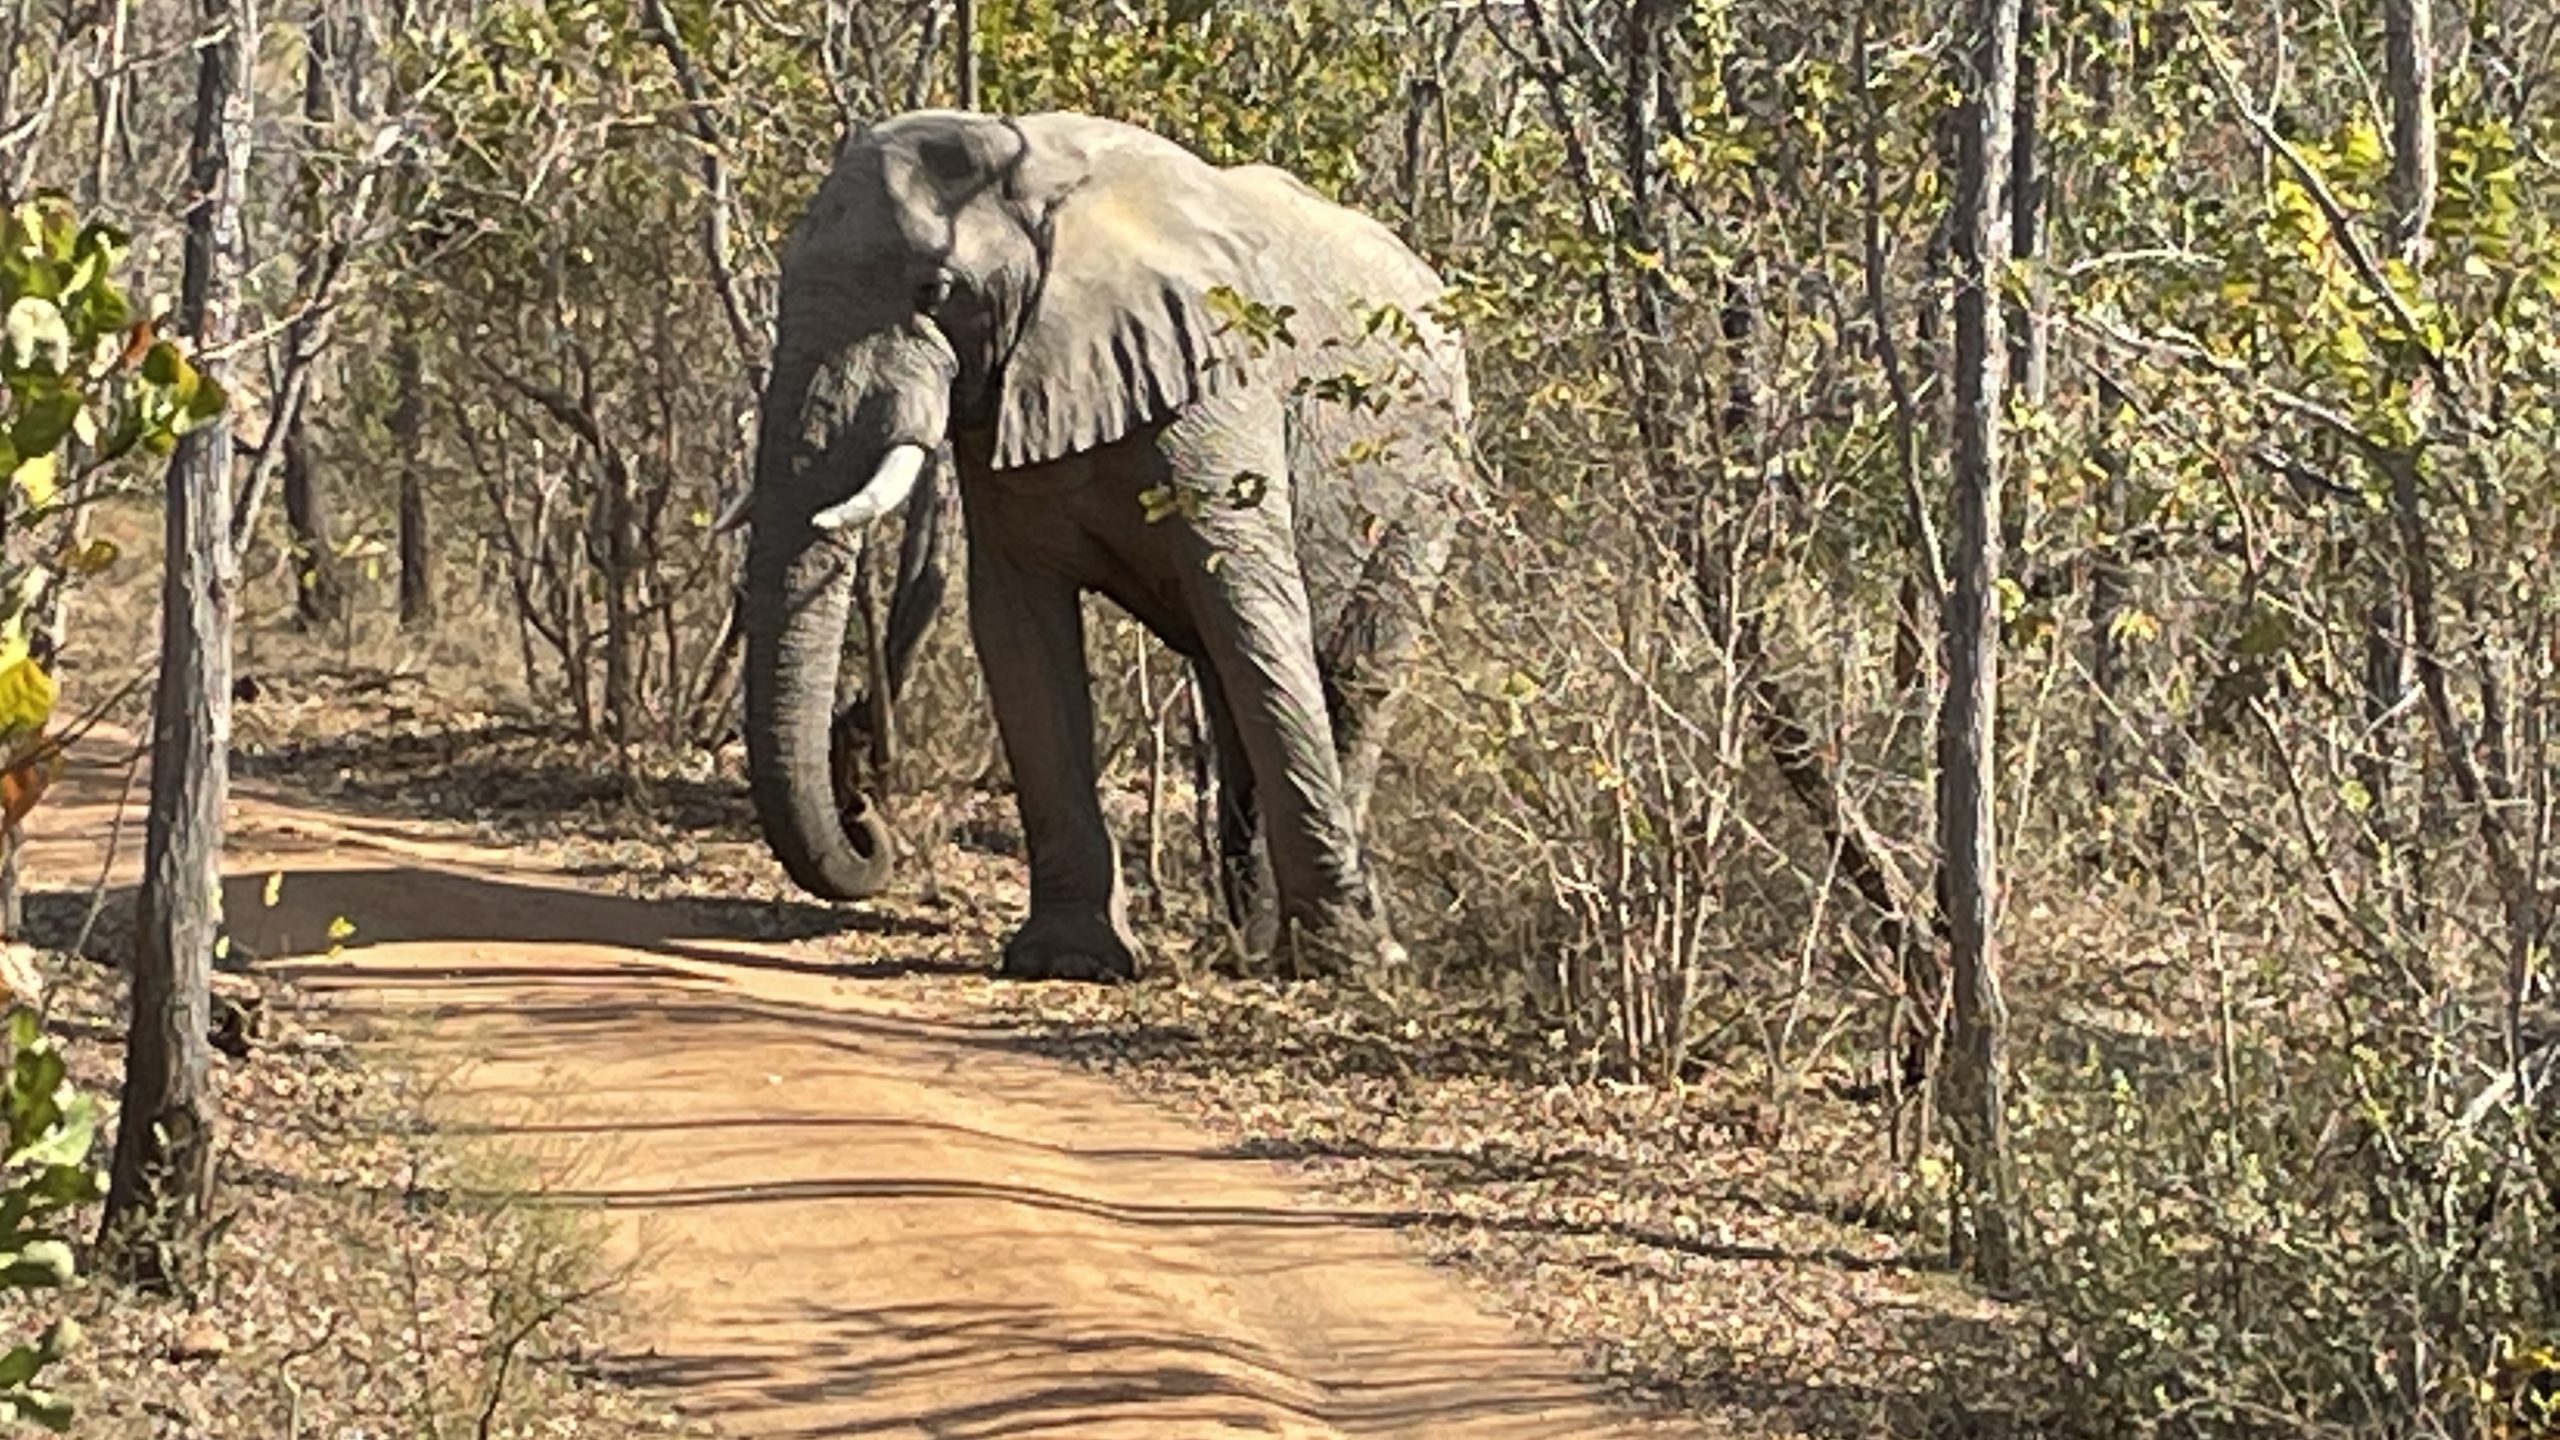 Sabatana Private Reserve Elephant in Bush African Safari Point Hacks by Daniel Sciberras